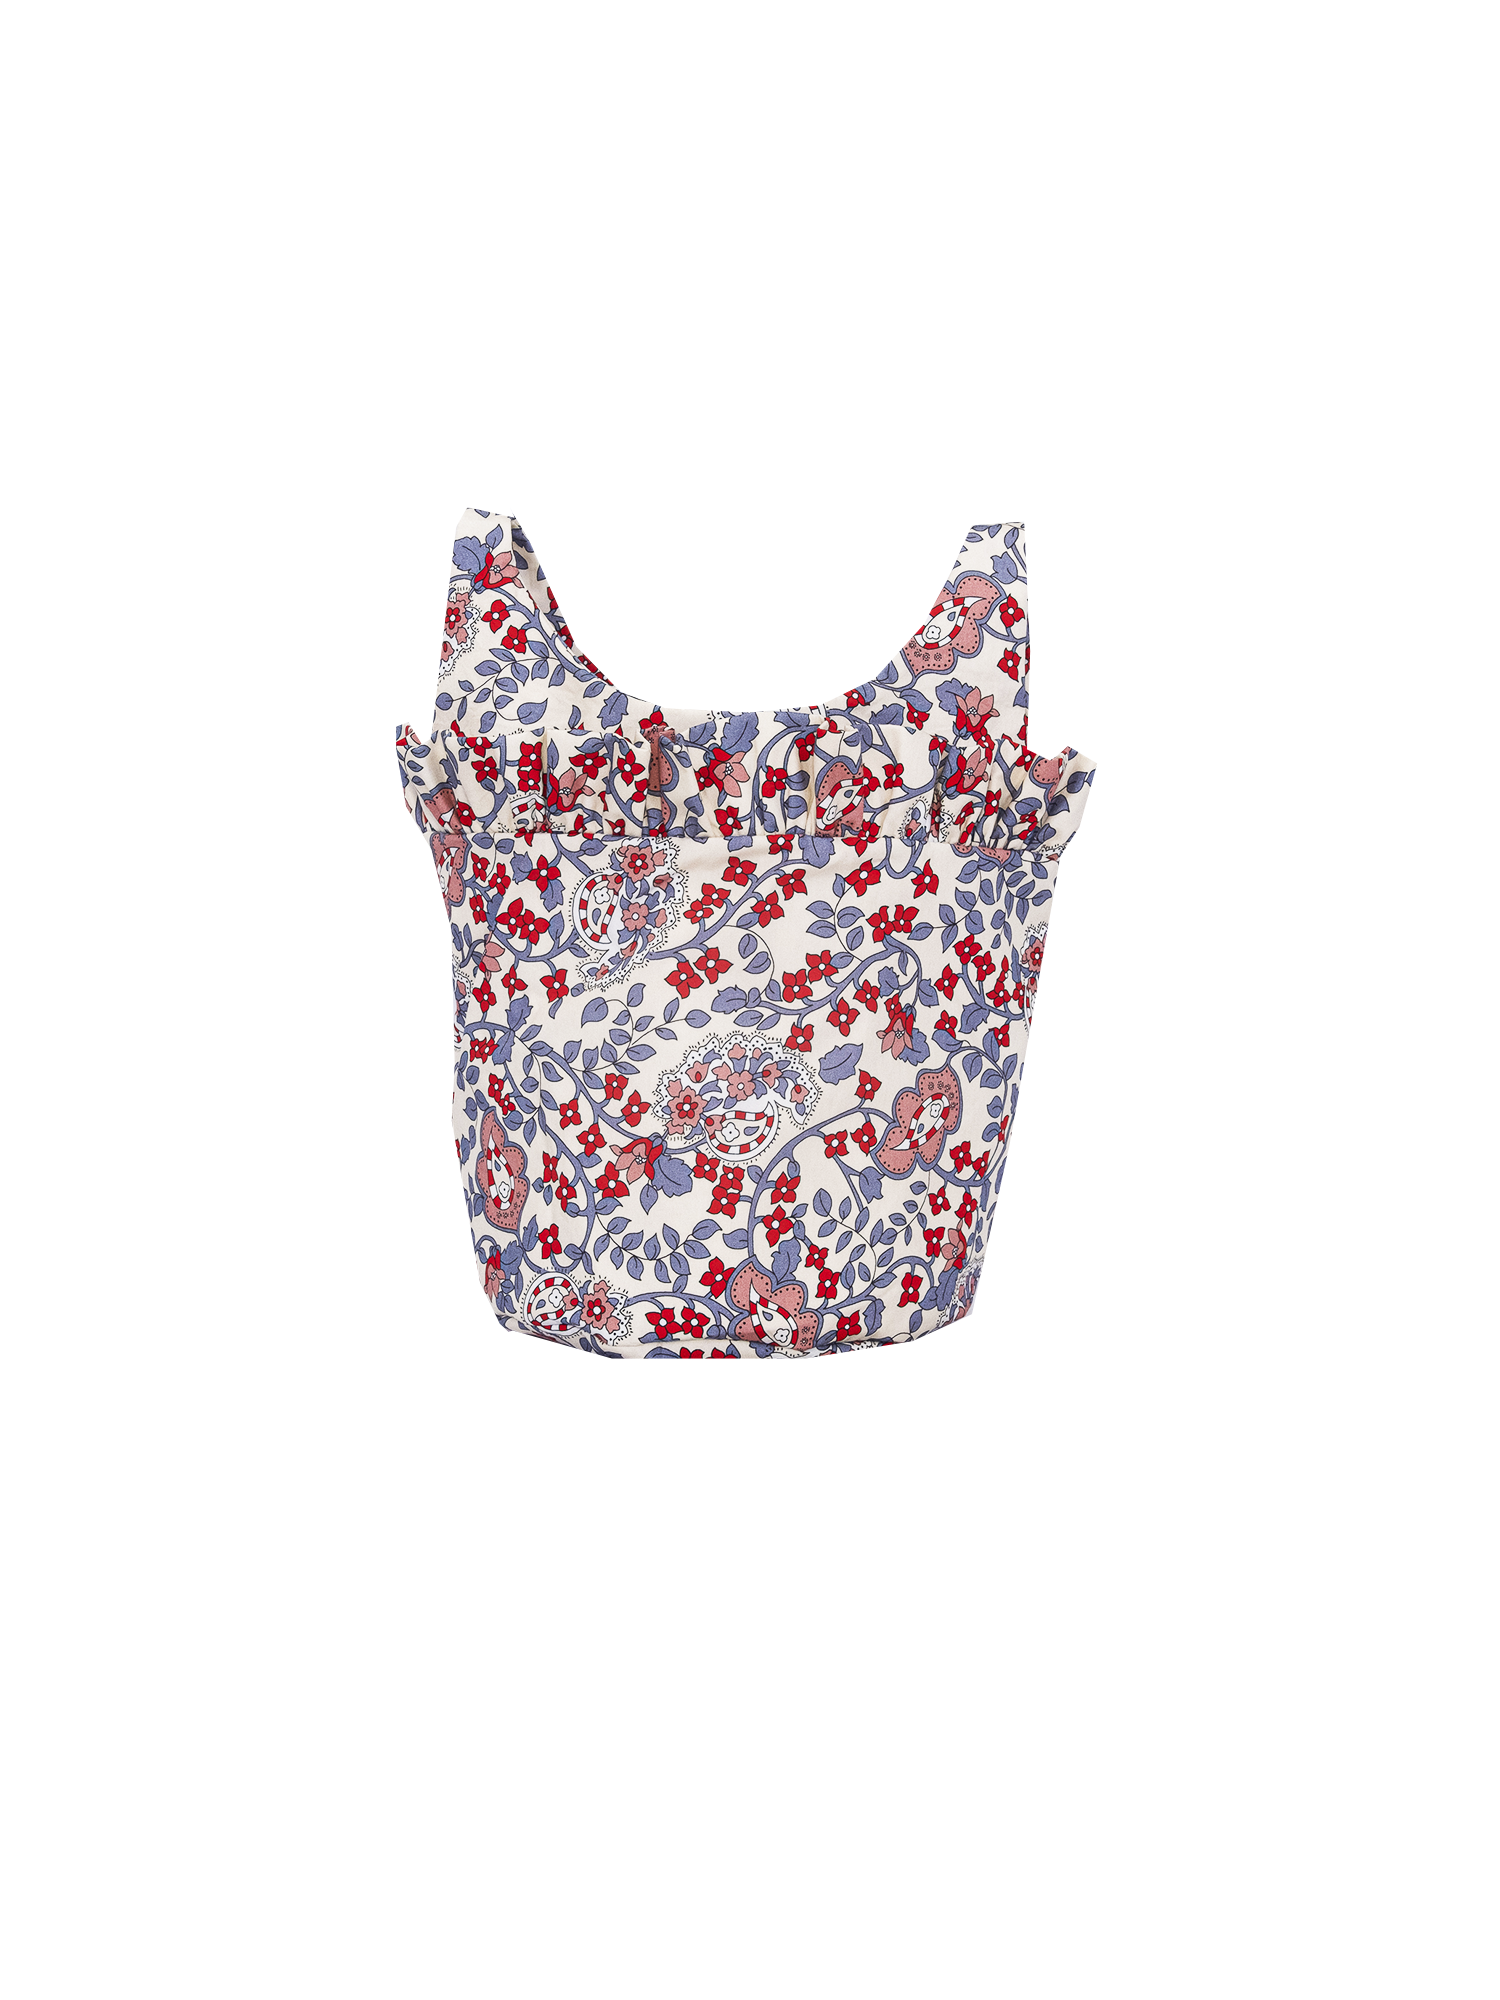 JASMINE - cotton tote bag in Kew pattern